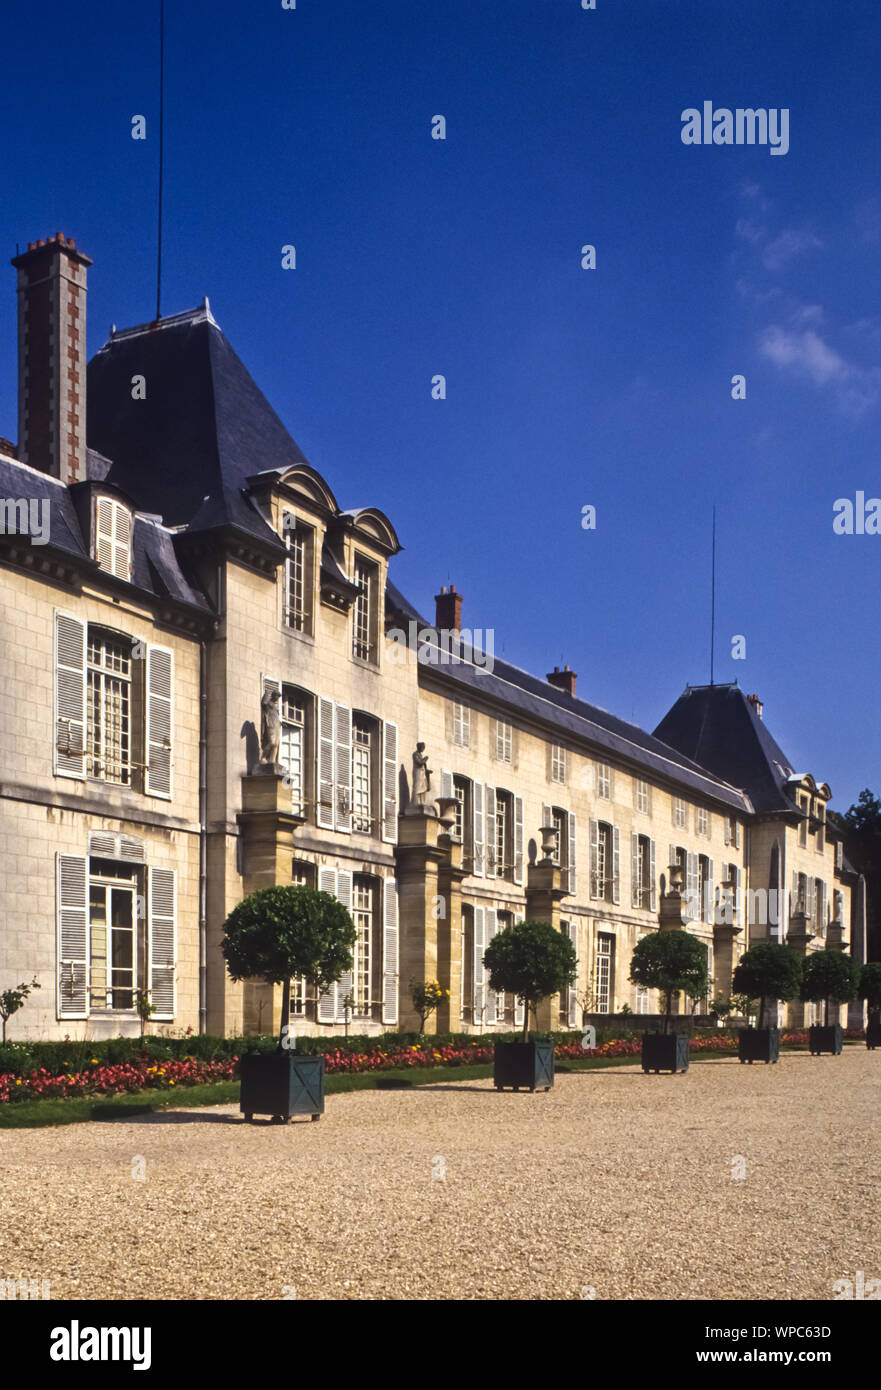 Chateau de malmaison hi-res stock photography and images - Alamy